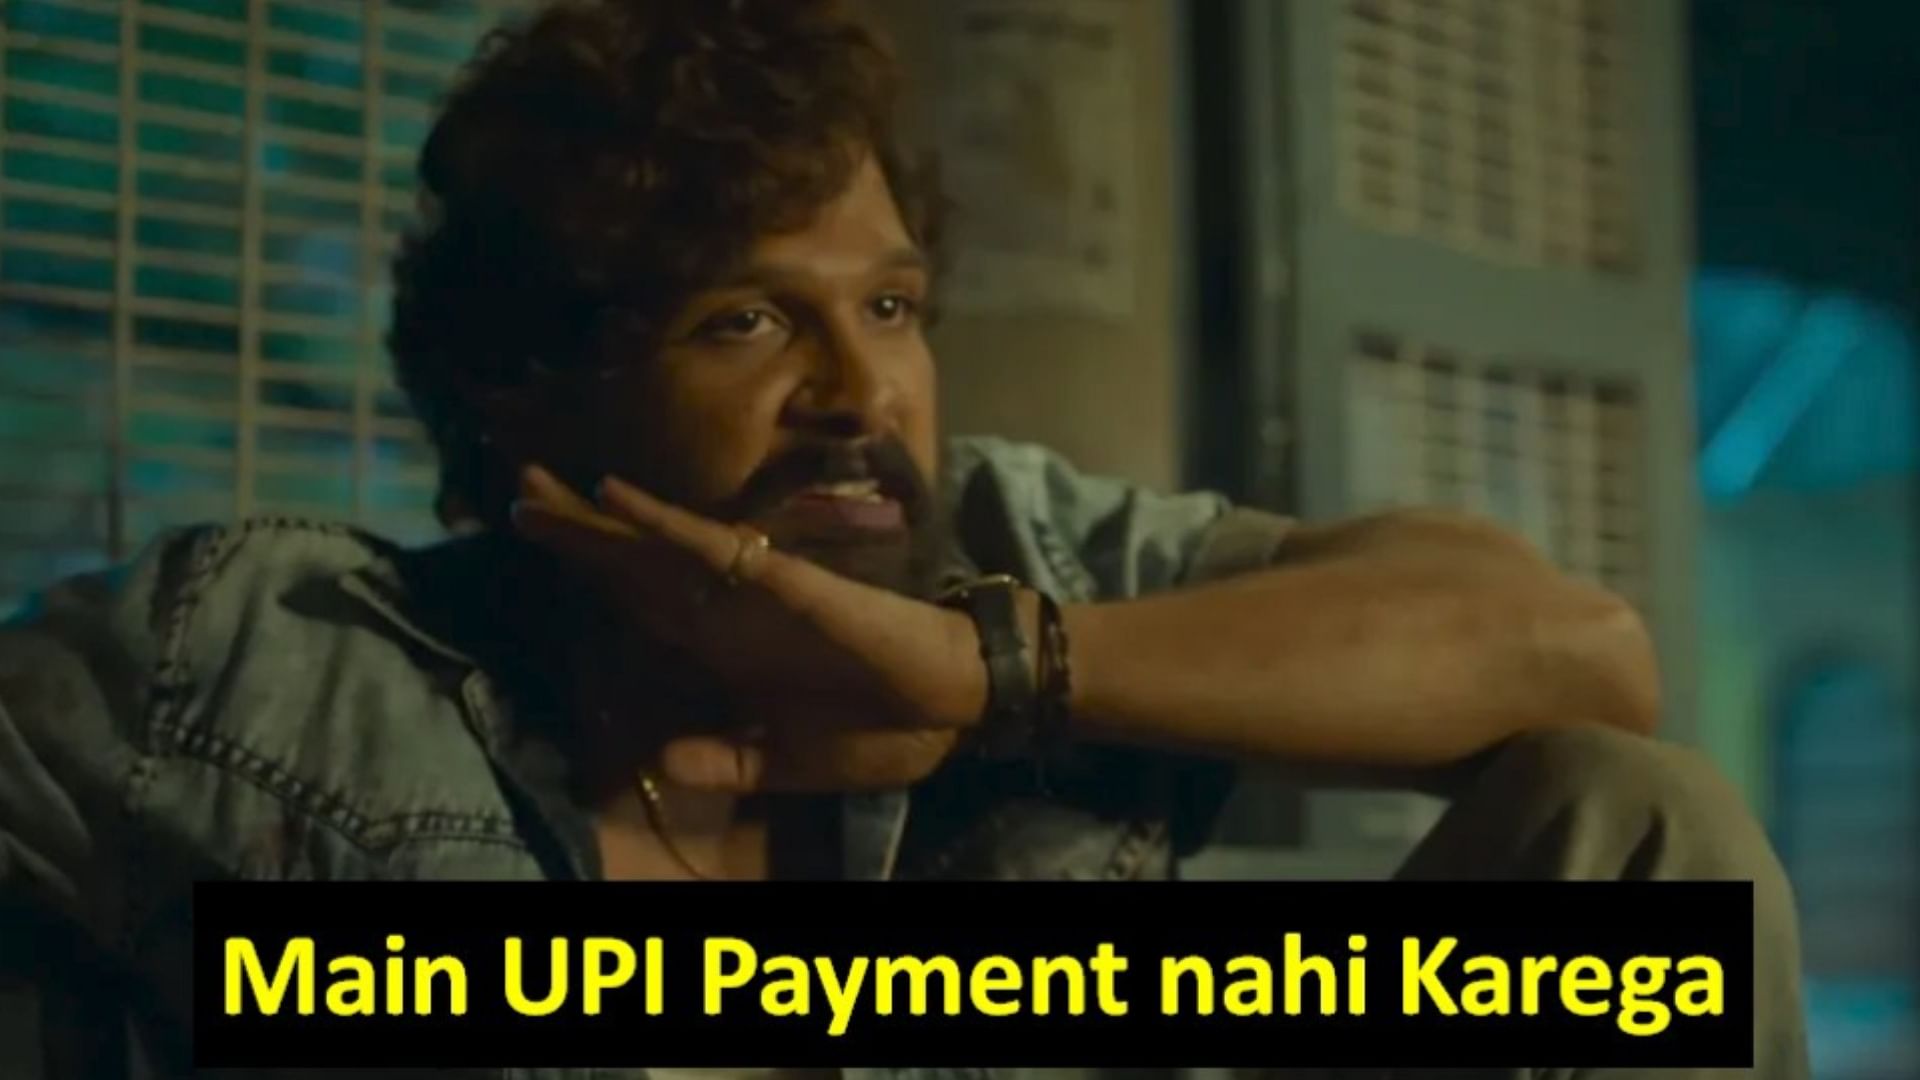 upi memes are trending on social media memes erupt over new charges on UPI transactions